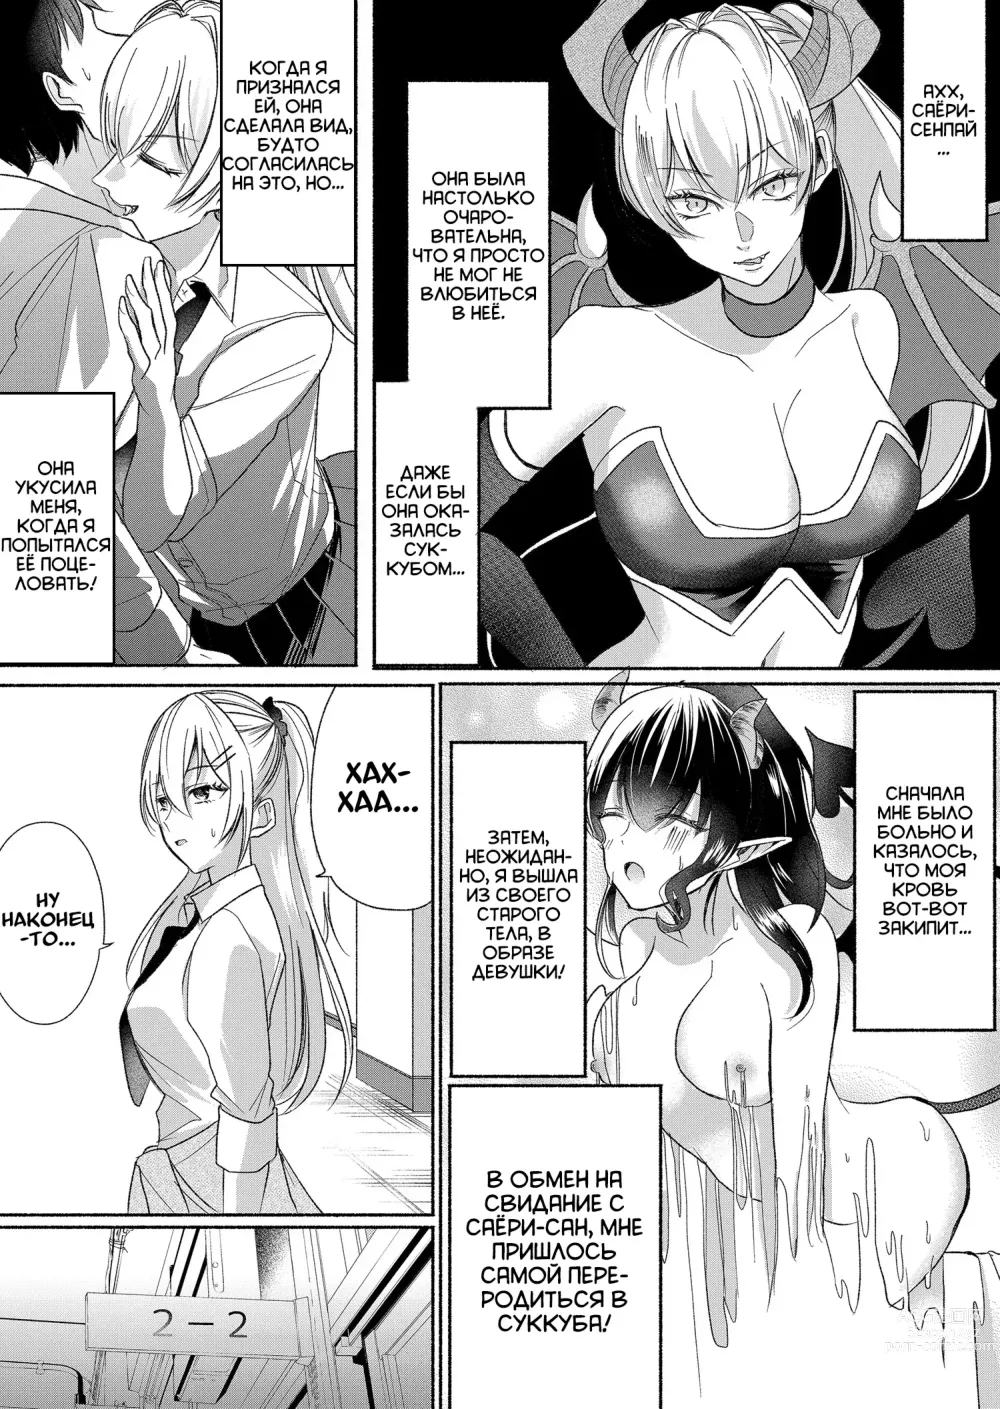 Page 5 of doujinshi Суккуб, который ненавидит мужчин 2